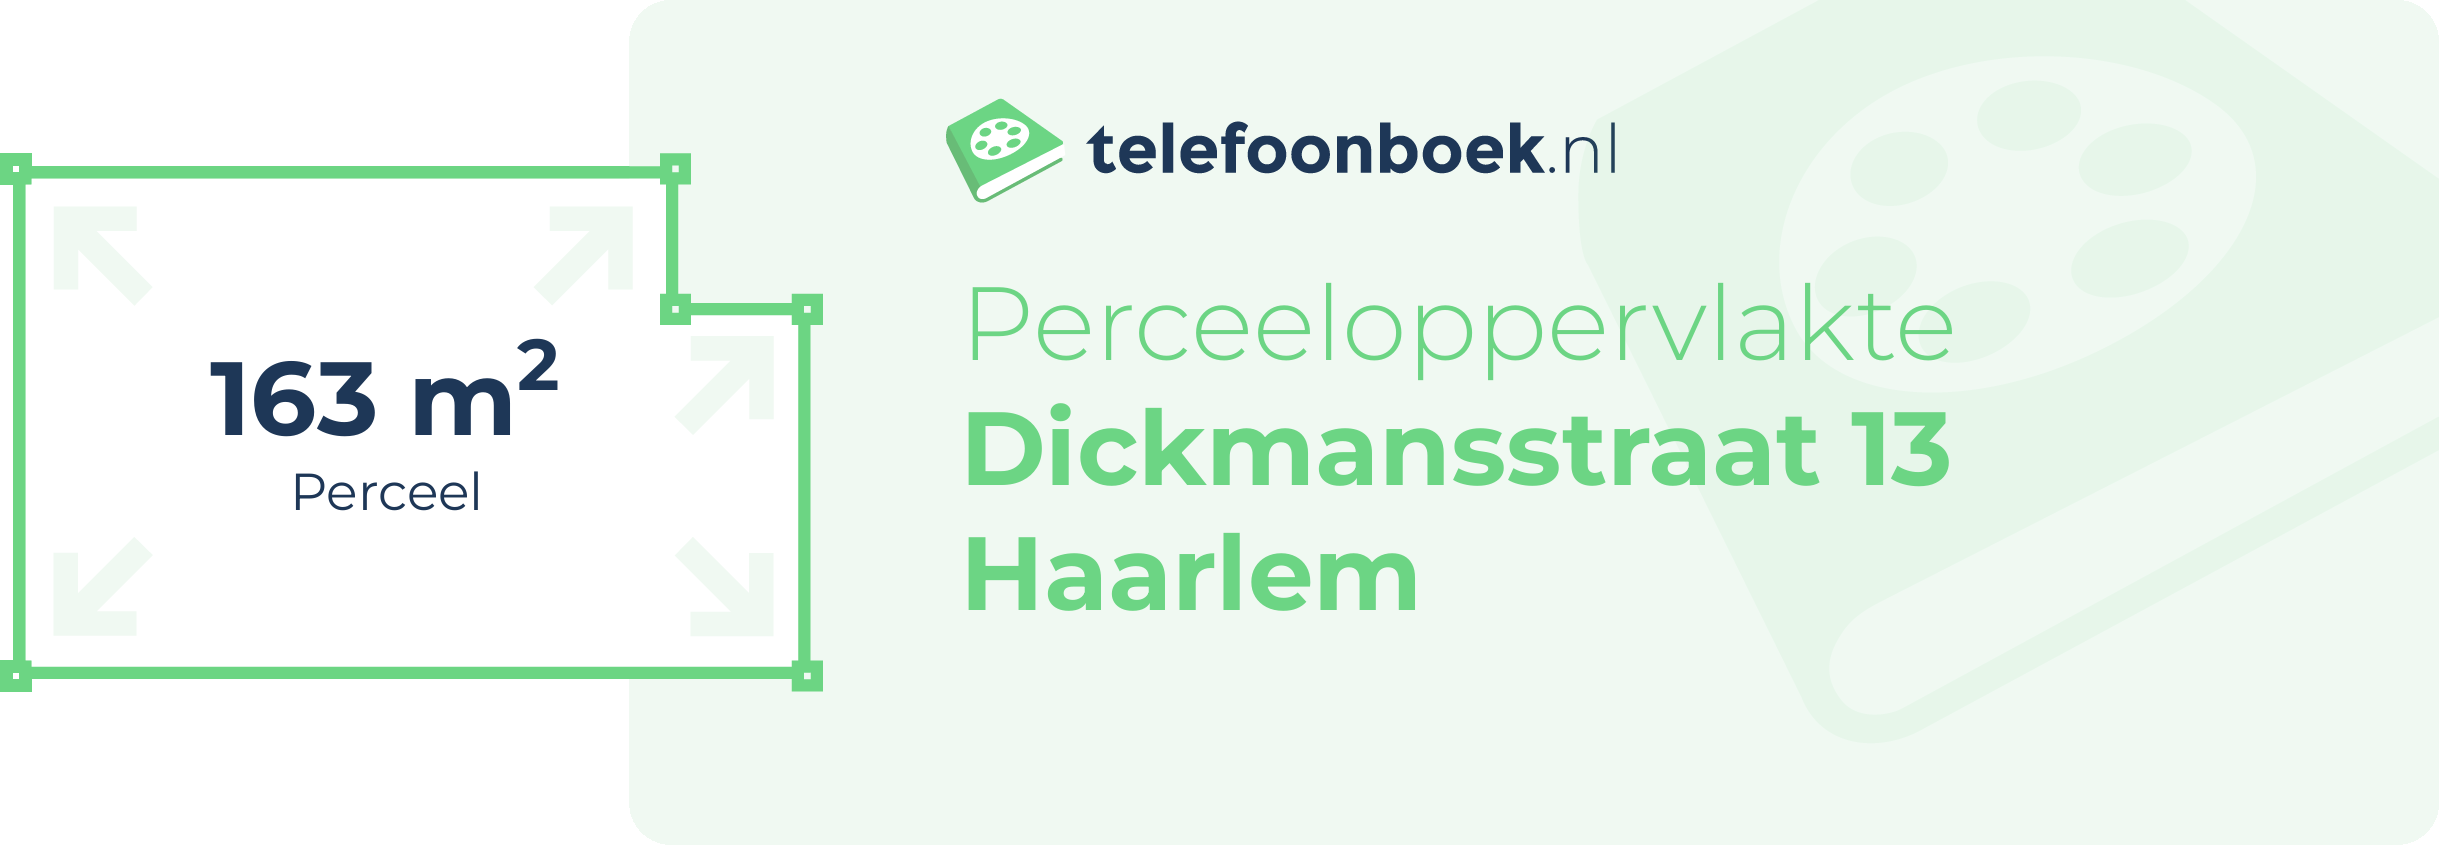 Perceeloppervlakte Dickmansstraat 13 Haarlem